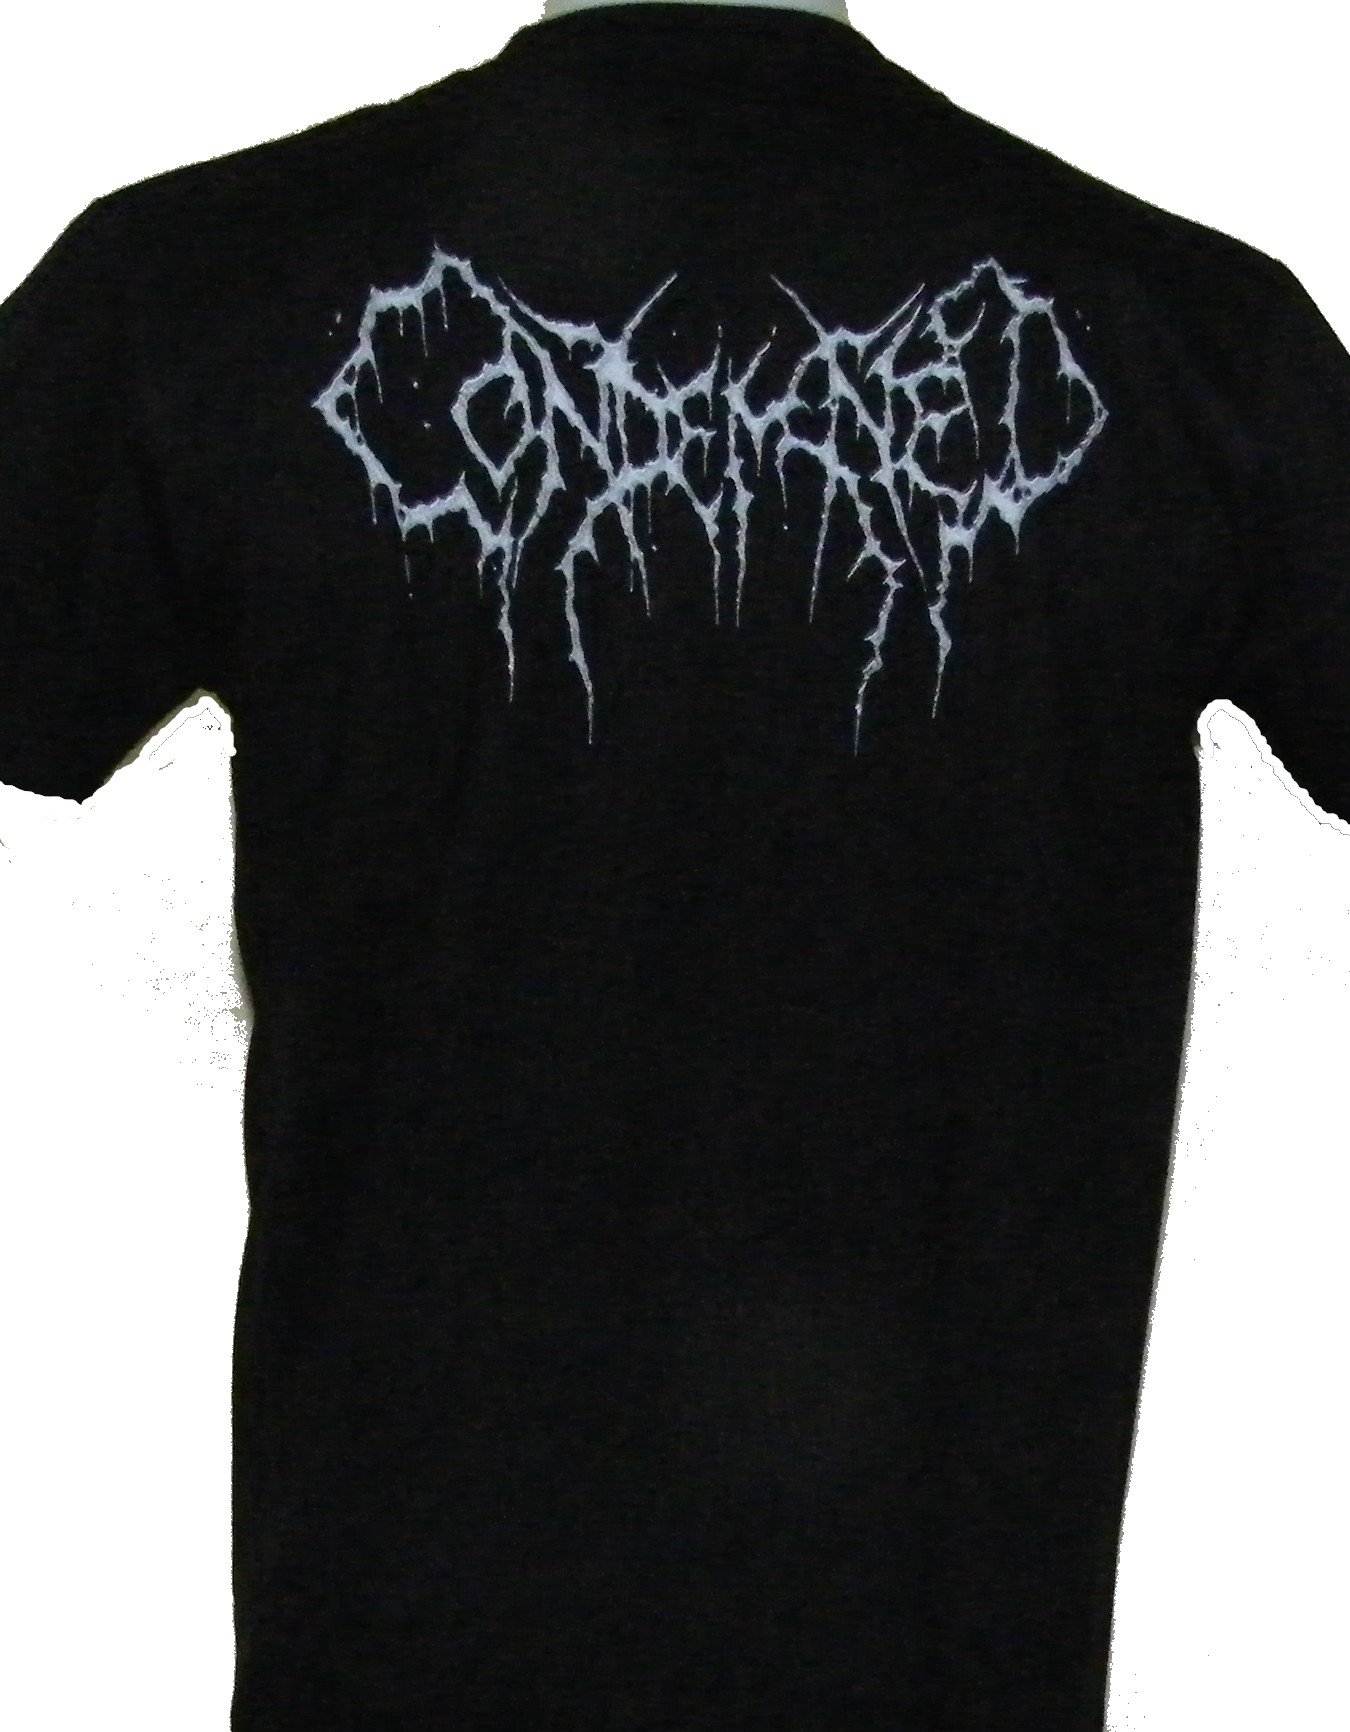 Condemned t-shirt size L – RoxxBKK